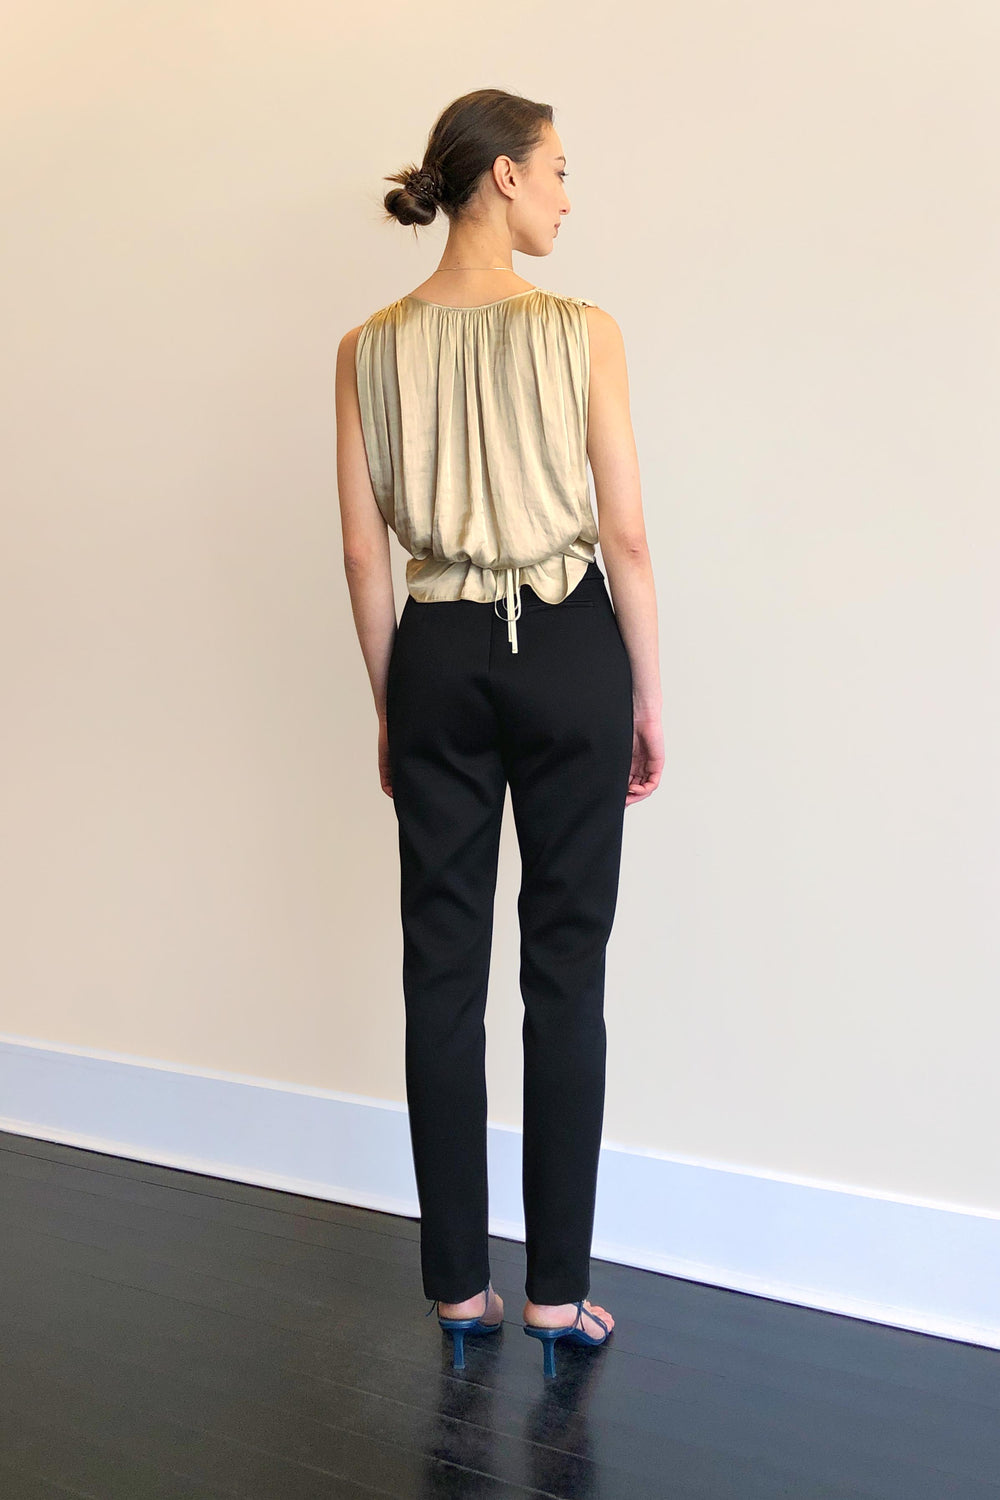 Fashion Designer CARL KAPP collection | Obsidian Tailored Structured Black Satin Trousers, Pants | Sydney Australia